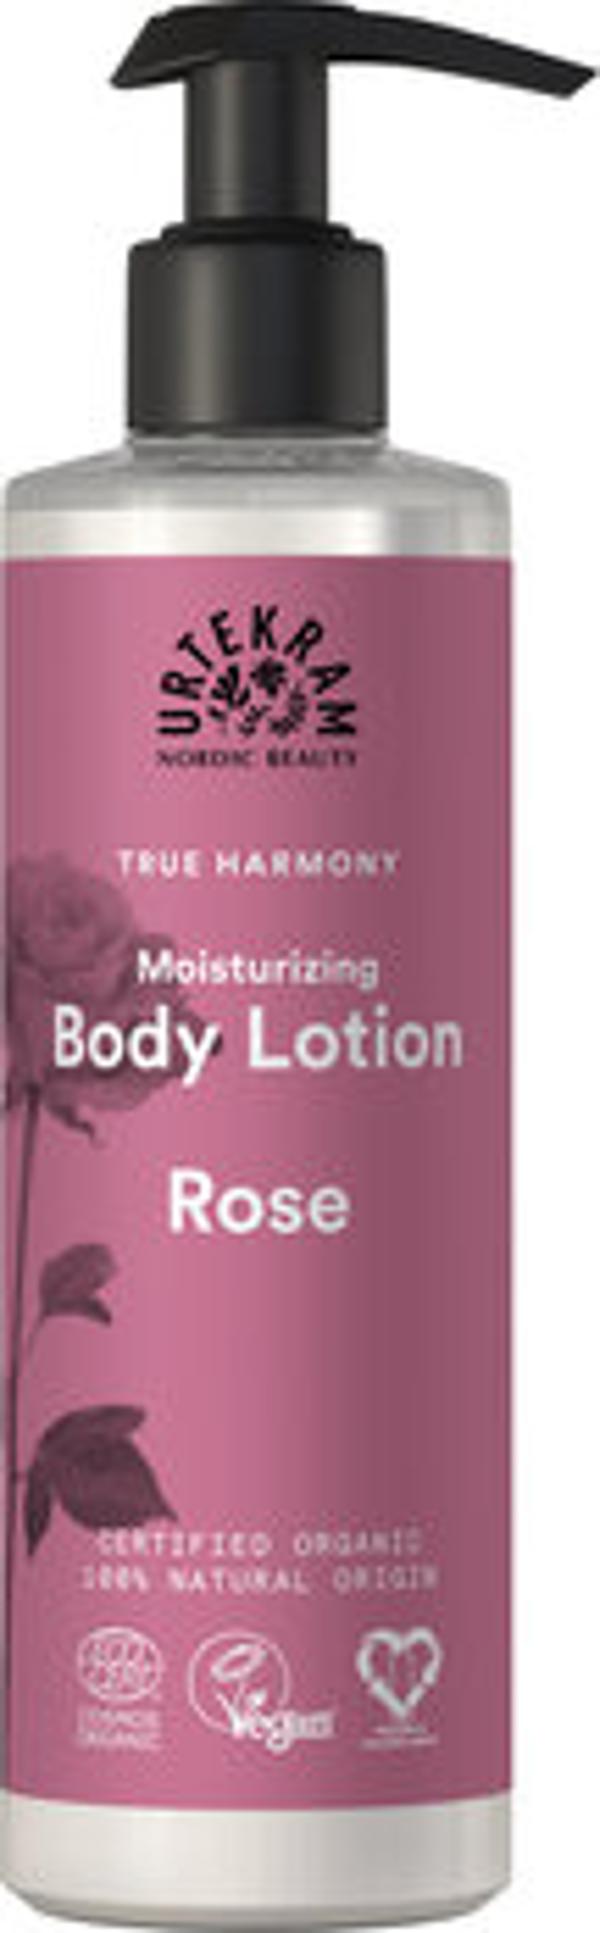 Produktfoto zu Rose Körperlotion 245 ml